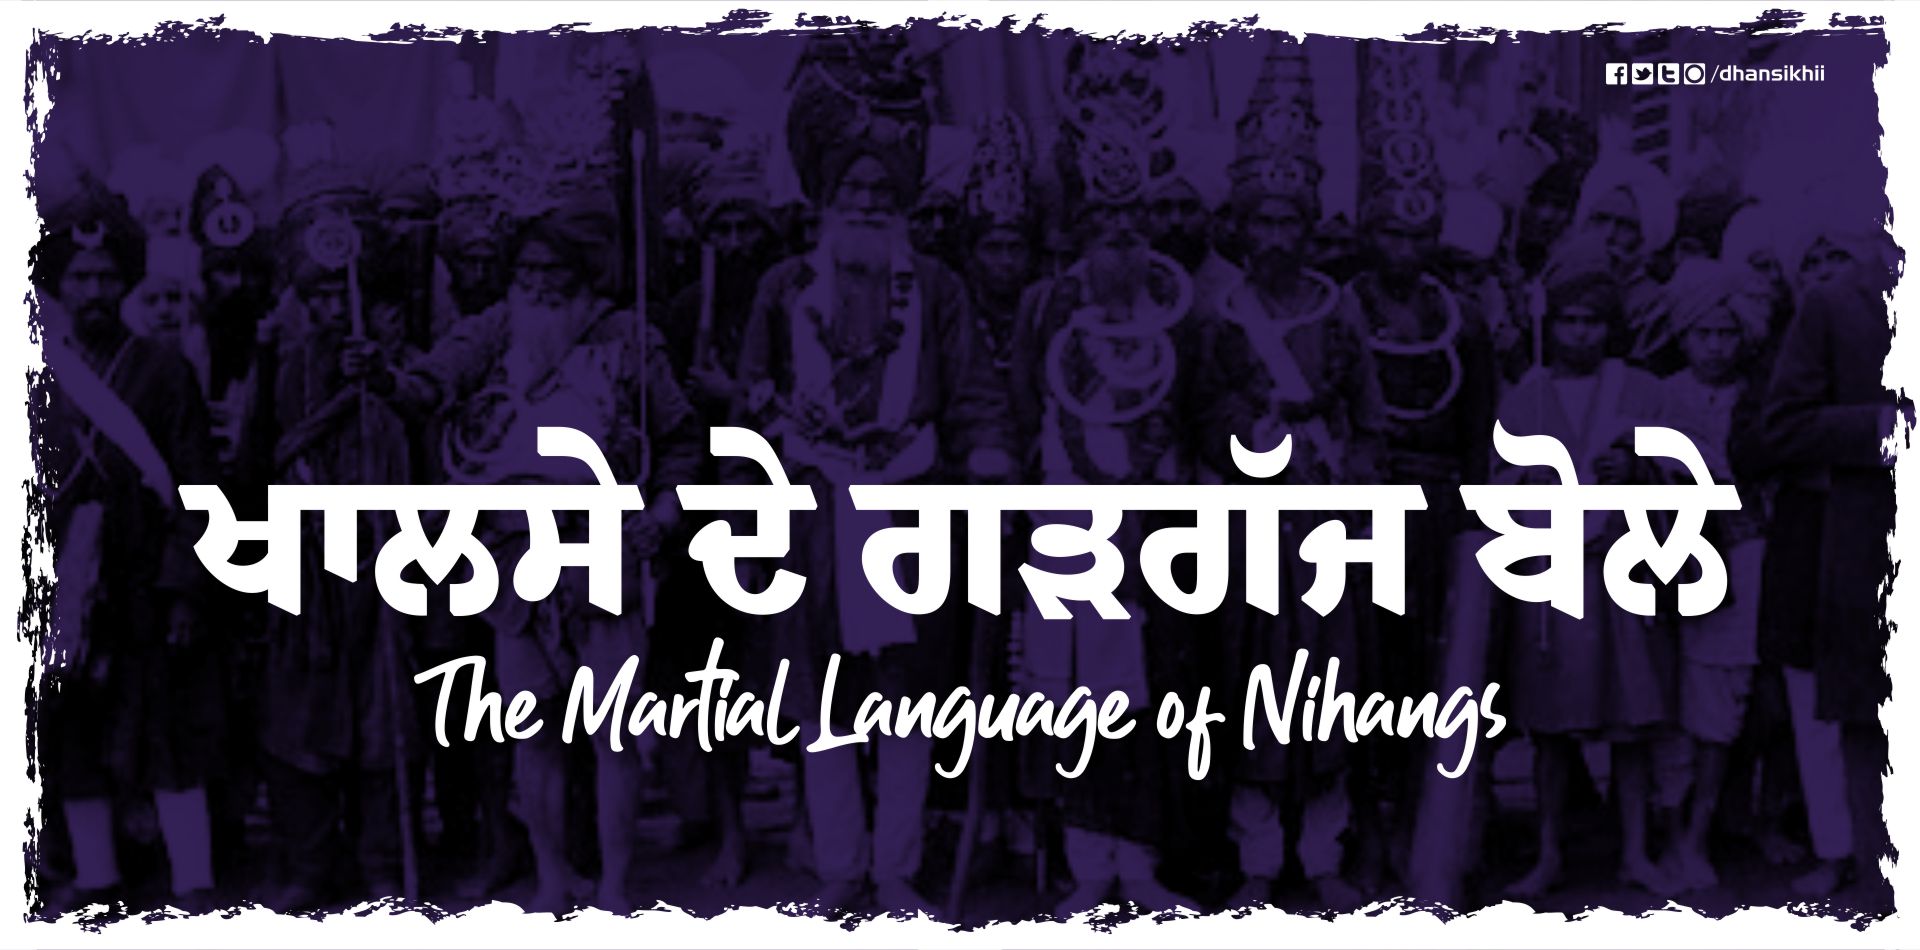 The Martial Language of Nihangs (Code Words)